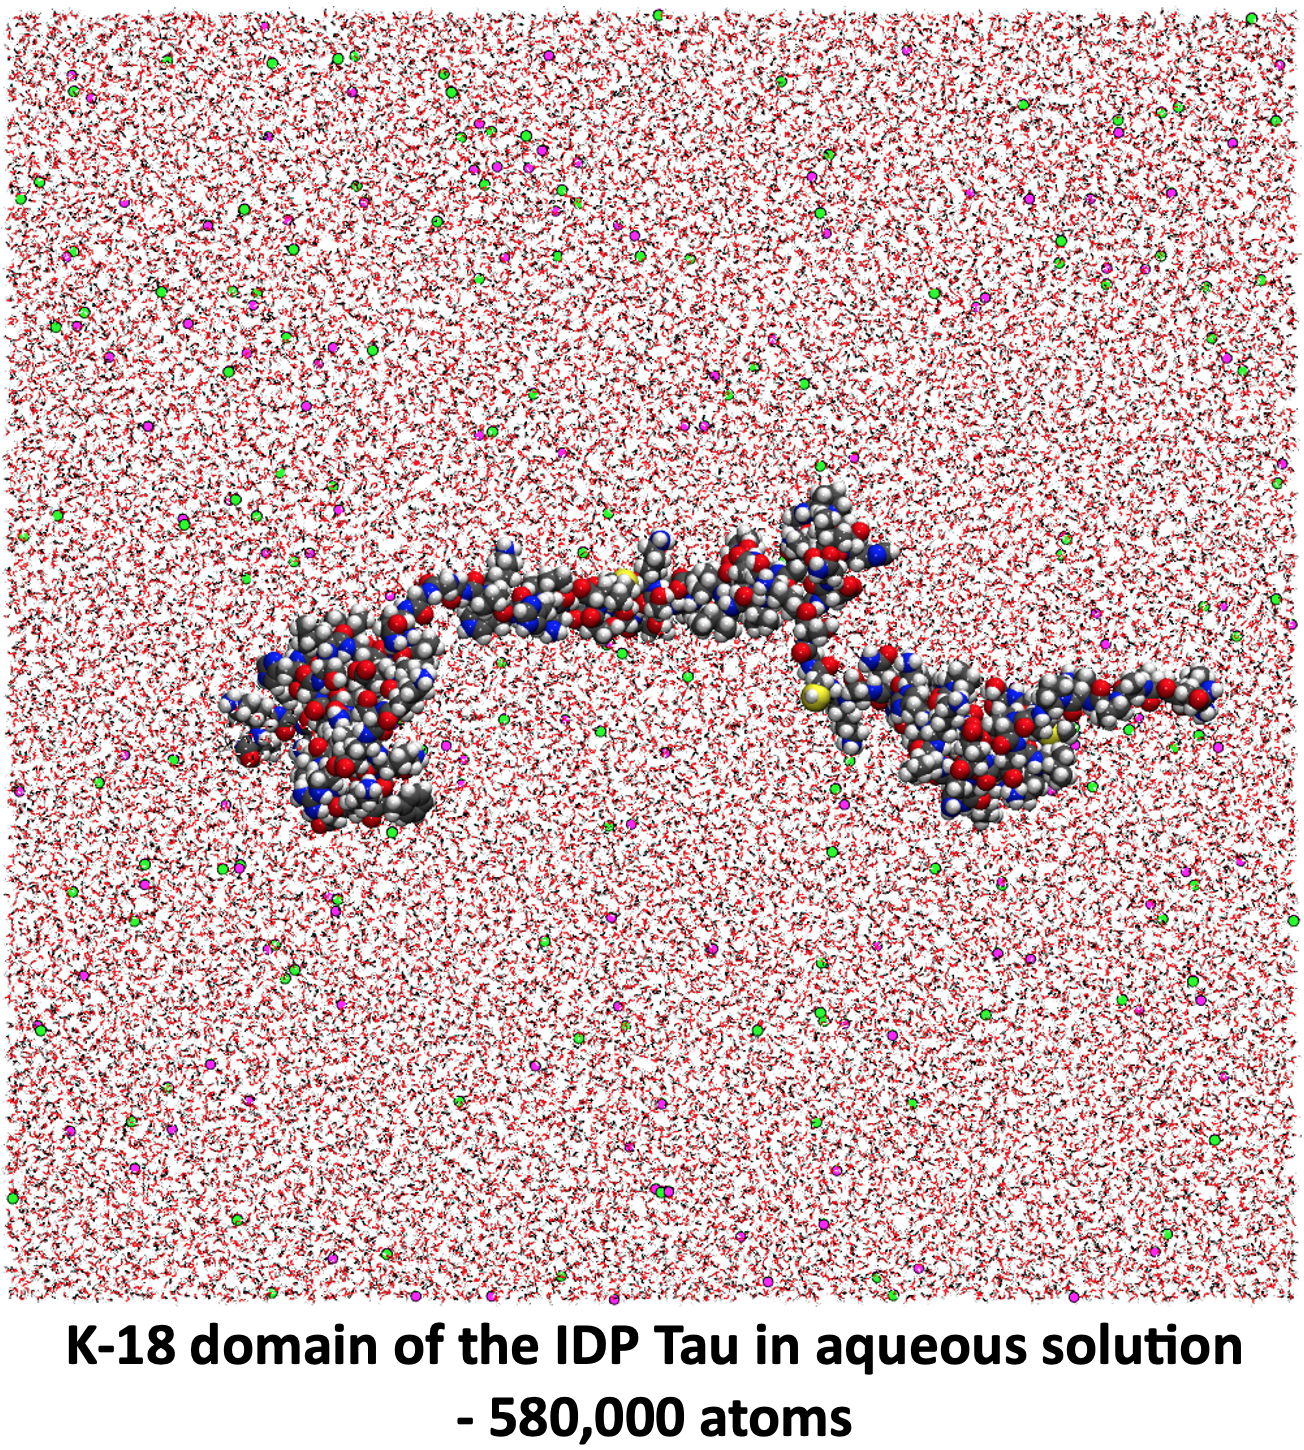 K-18 domain of IDP Tau in aqueous solution